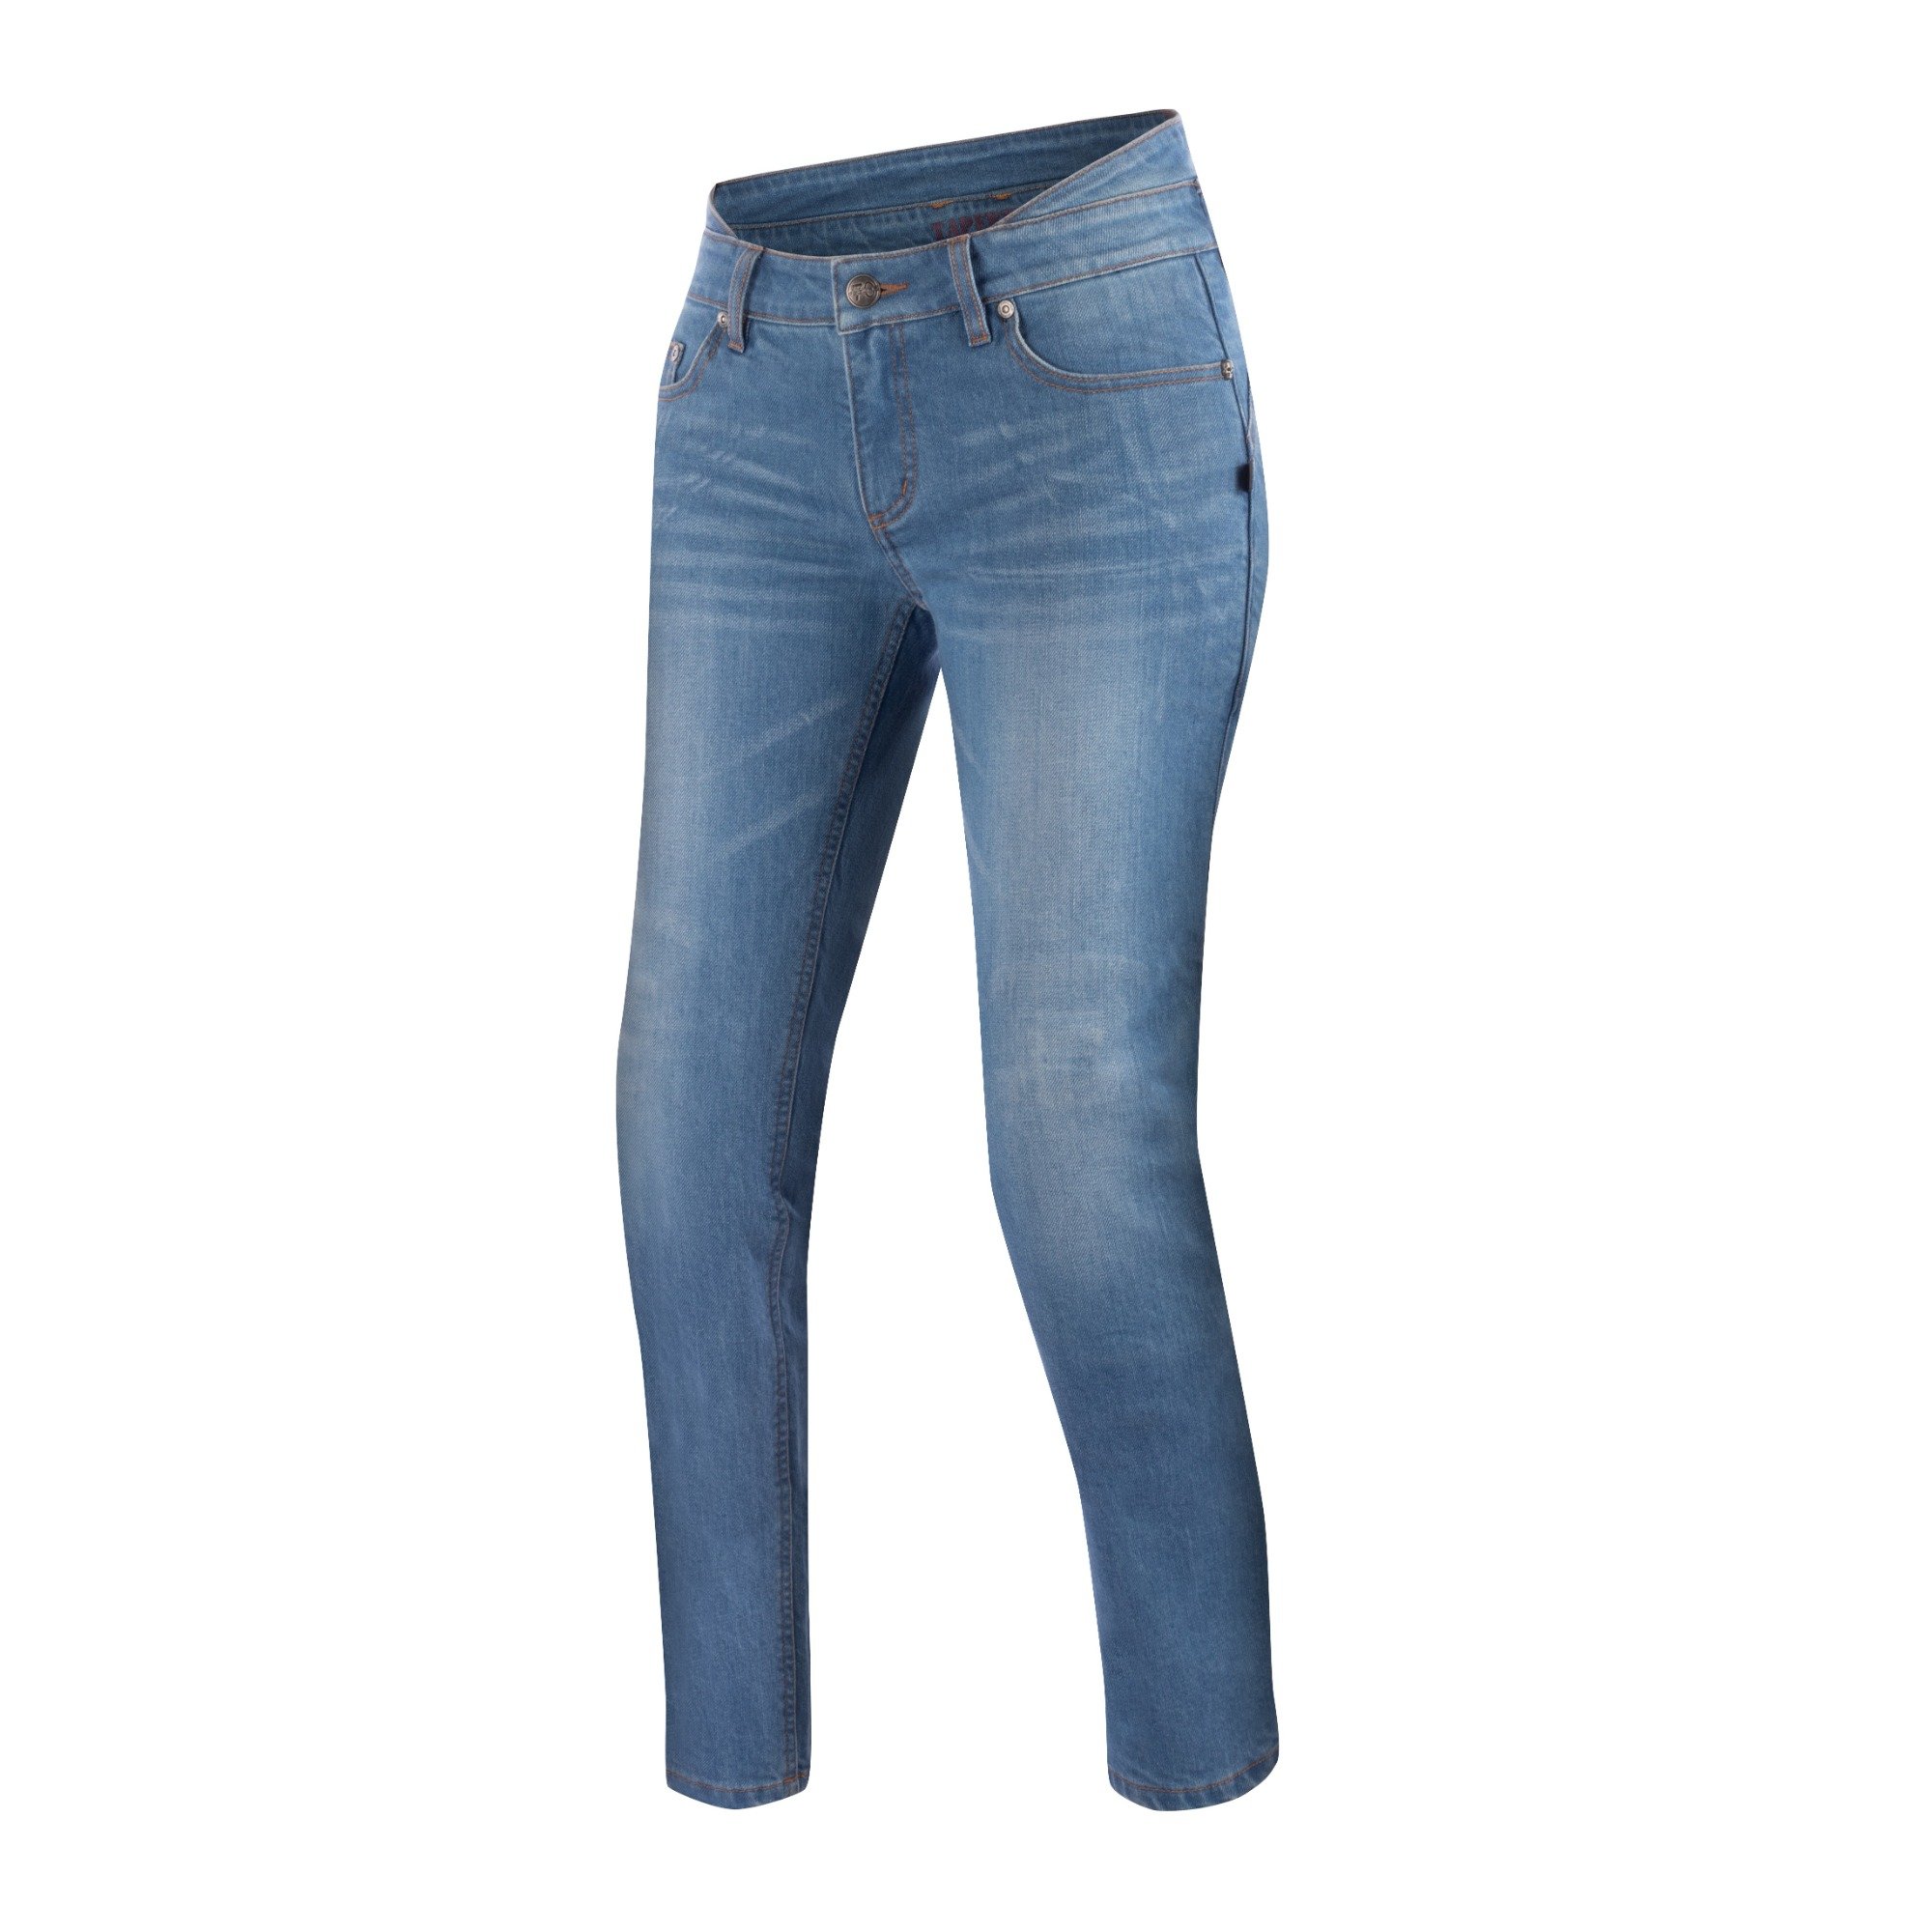 Image of Segura Trousers Lady Rosco Blue Size T2 ID 3660815168141